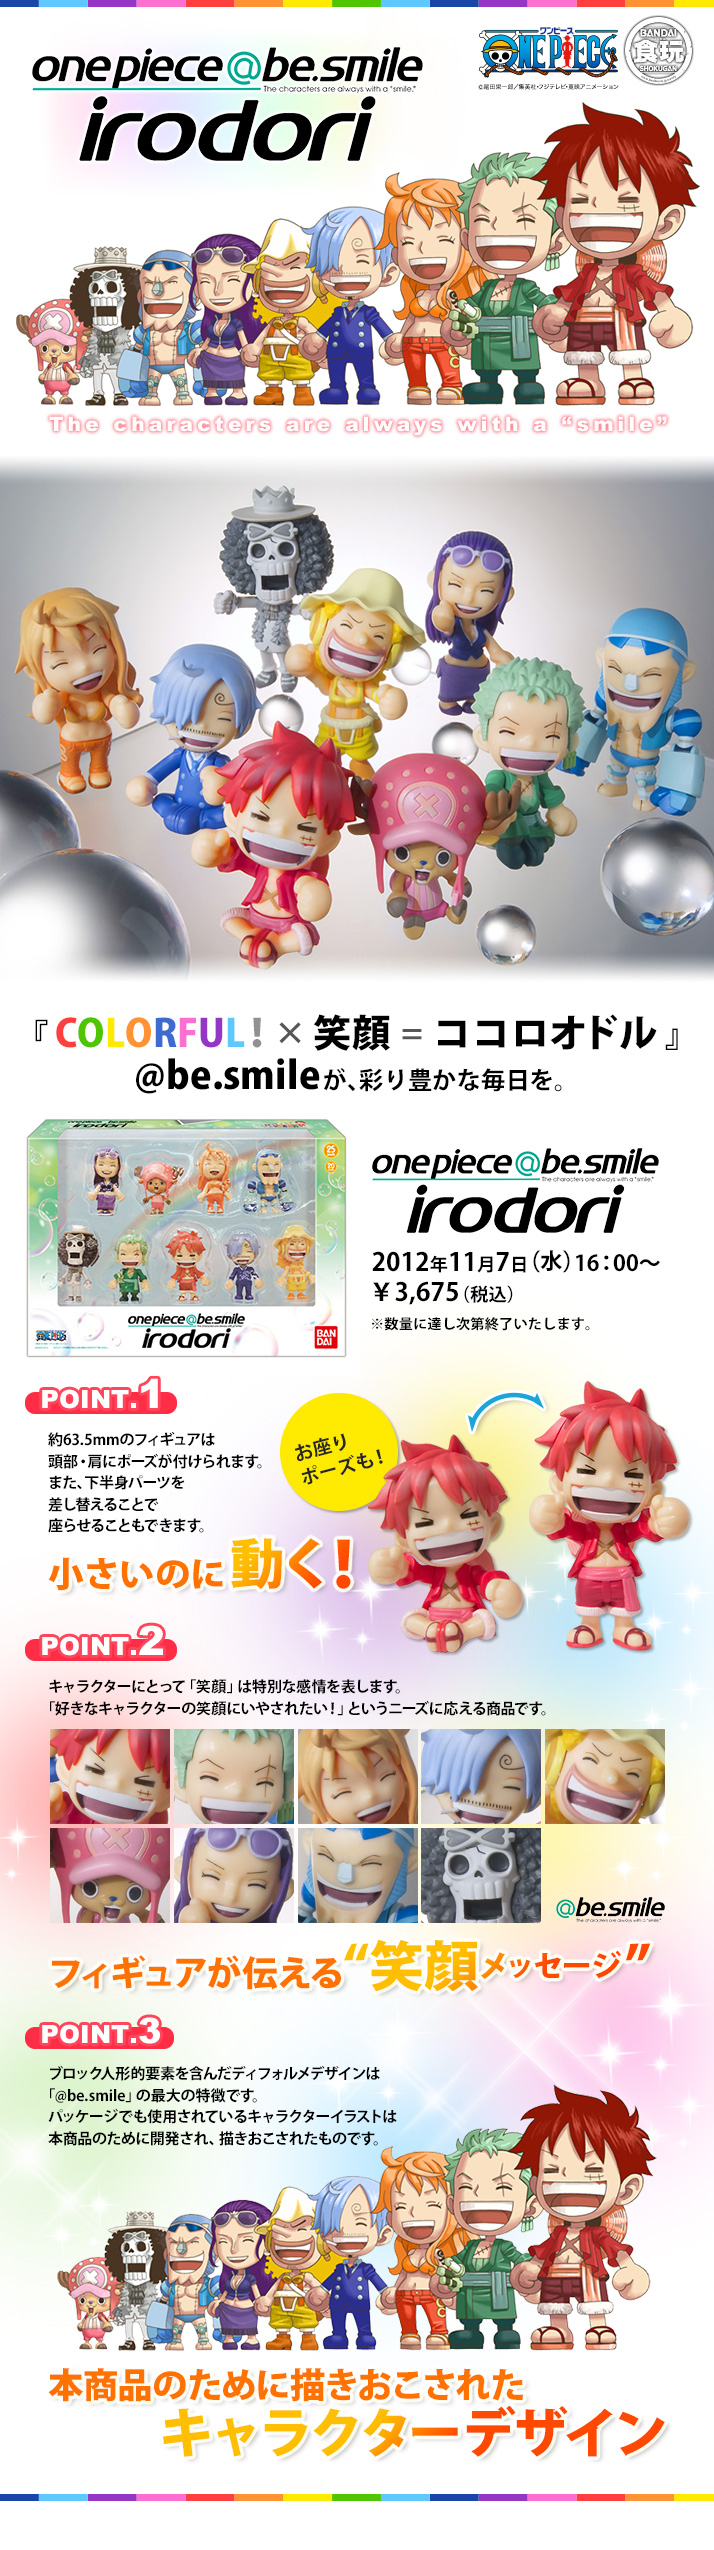 One Piece Be Smile Irodoriセット ワンピース 趣味 コレクション プレミアムバンダイ公式通販